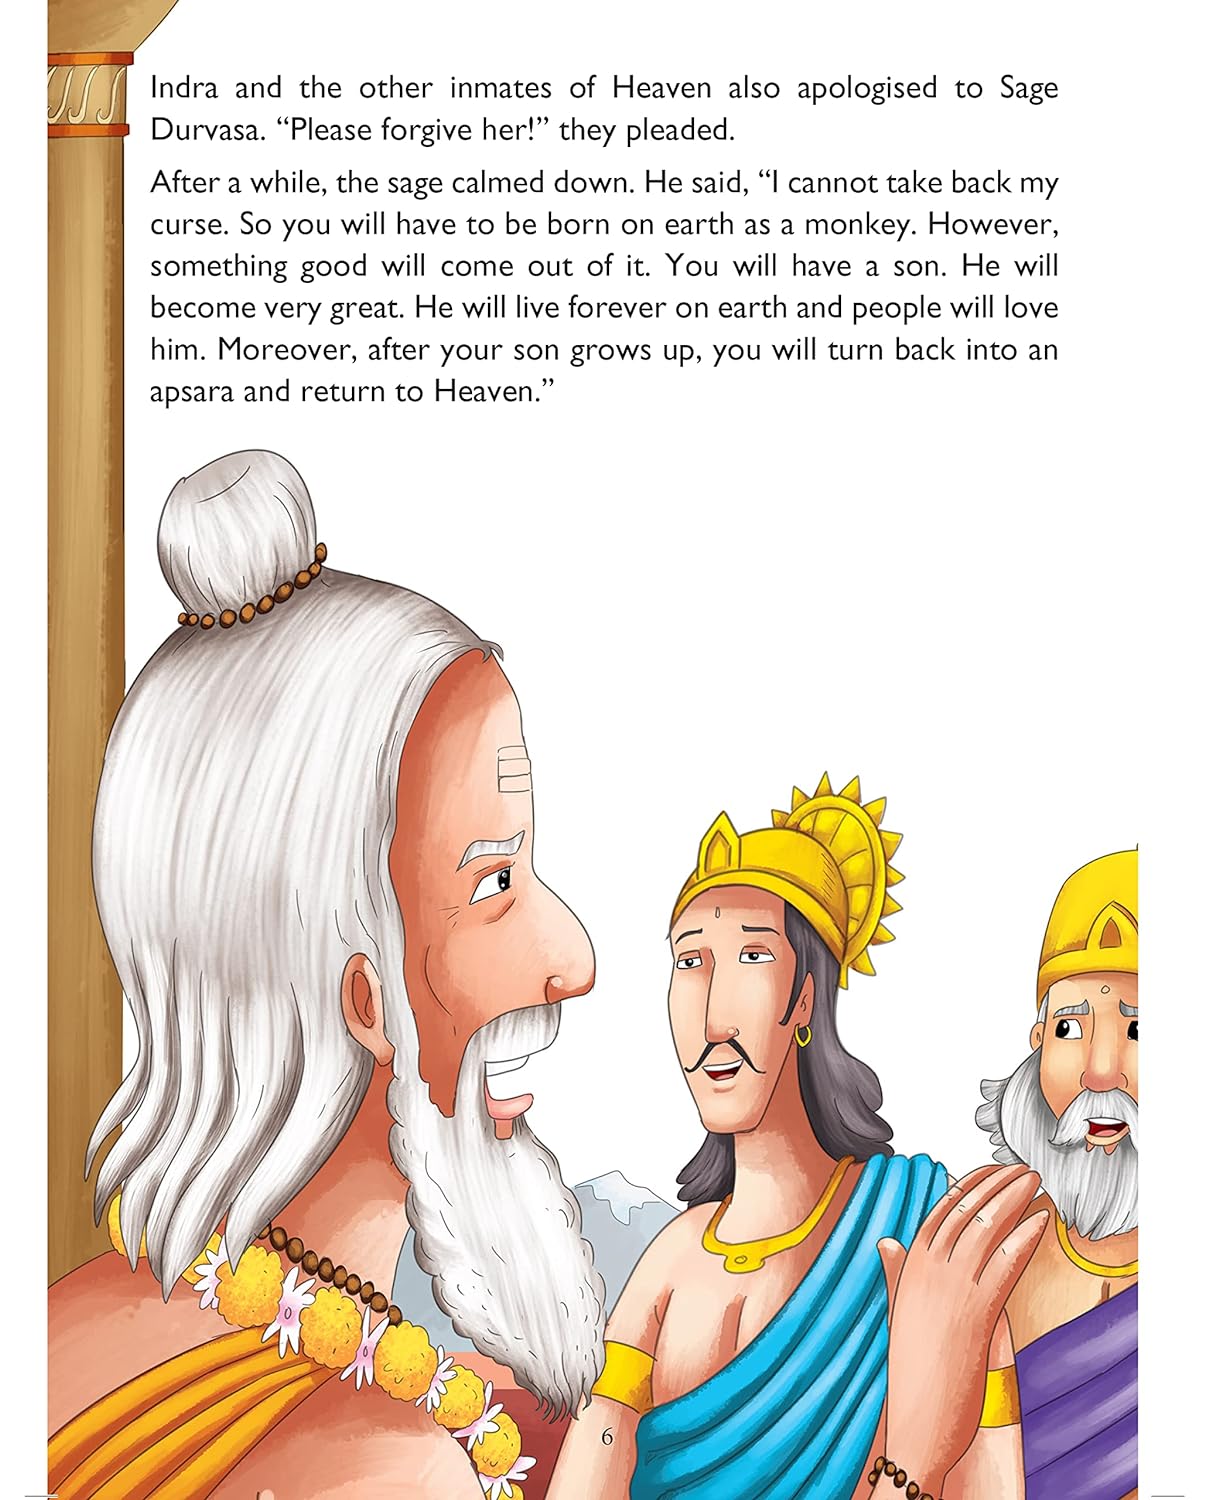 Pegasus Tales of Mighty Hanuman - Indian Mythological Stories